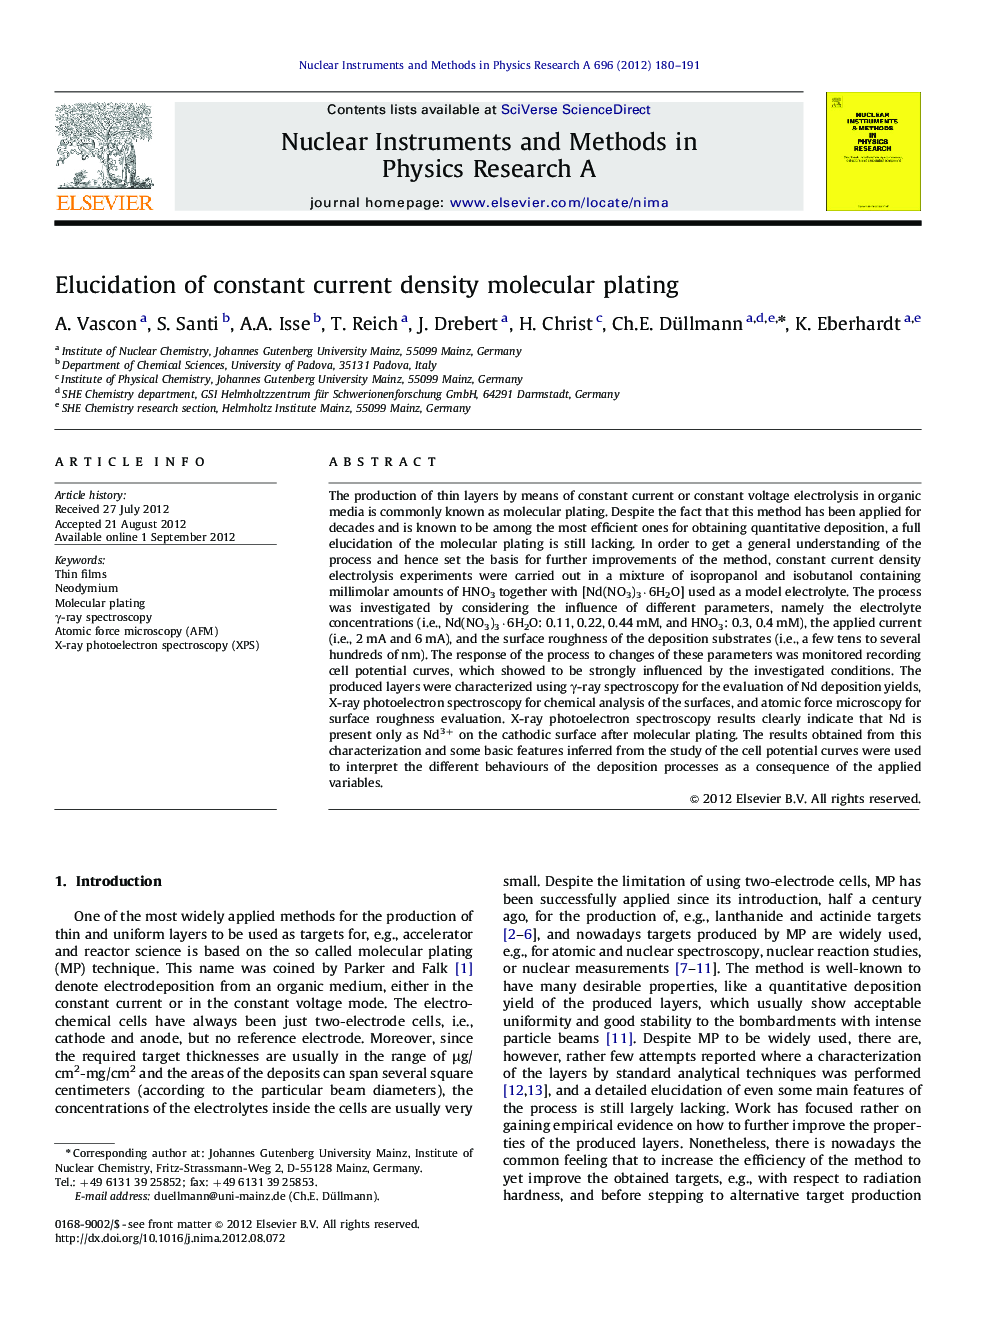 Elucidation of constant current density molecular plating